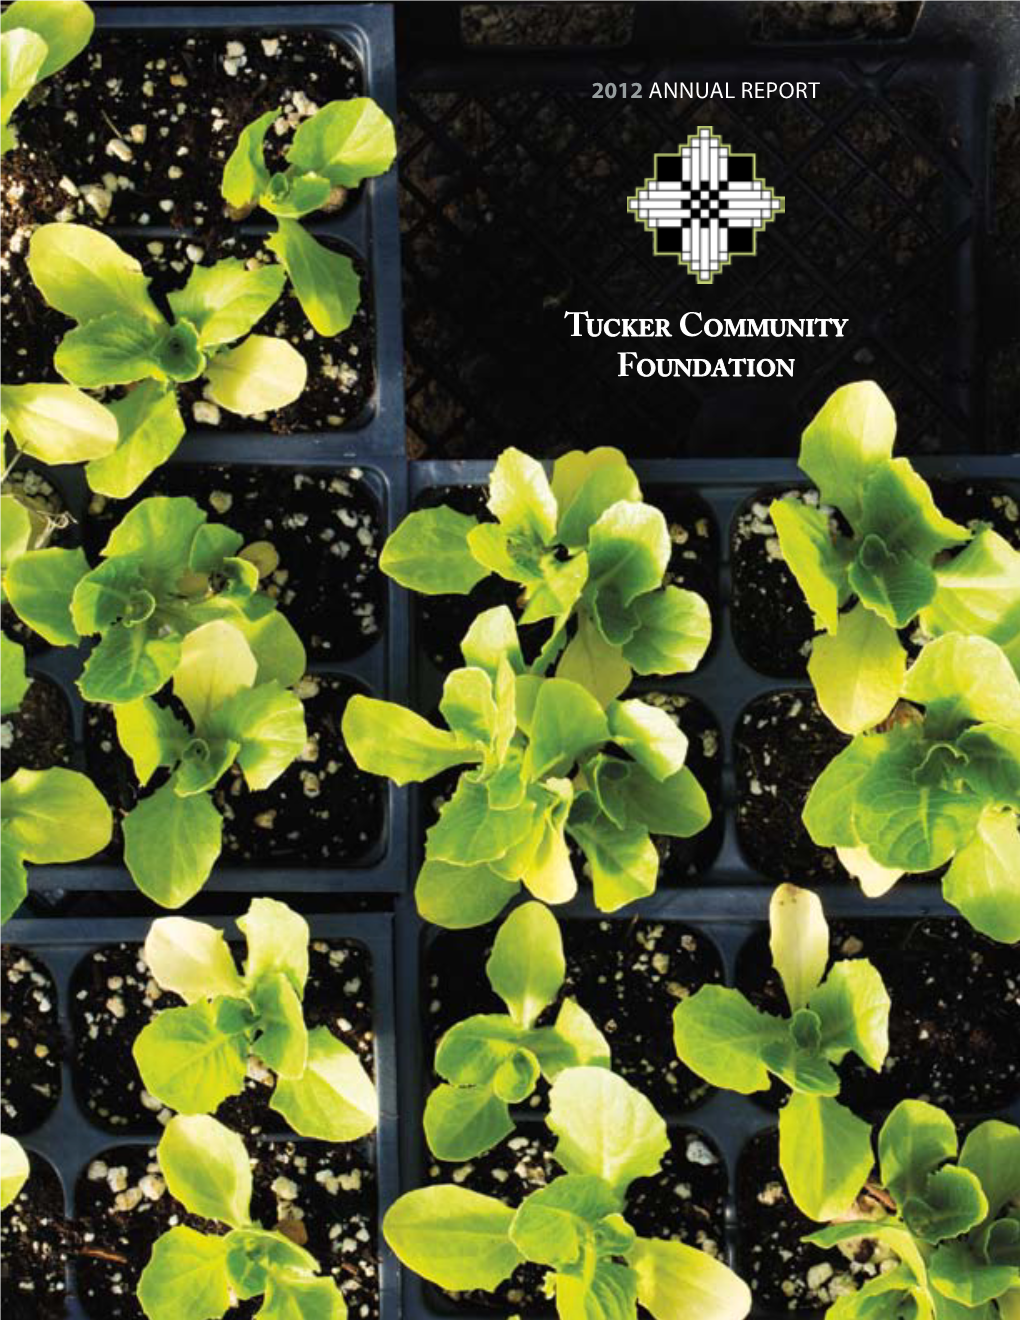 TUCKER COMMUNITY FOUNDATION 2012 Annual Report